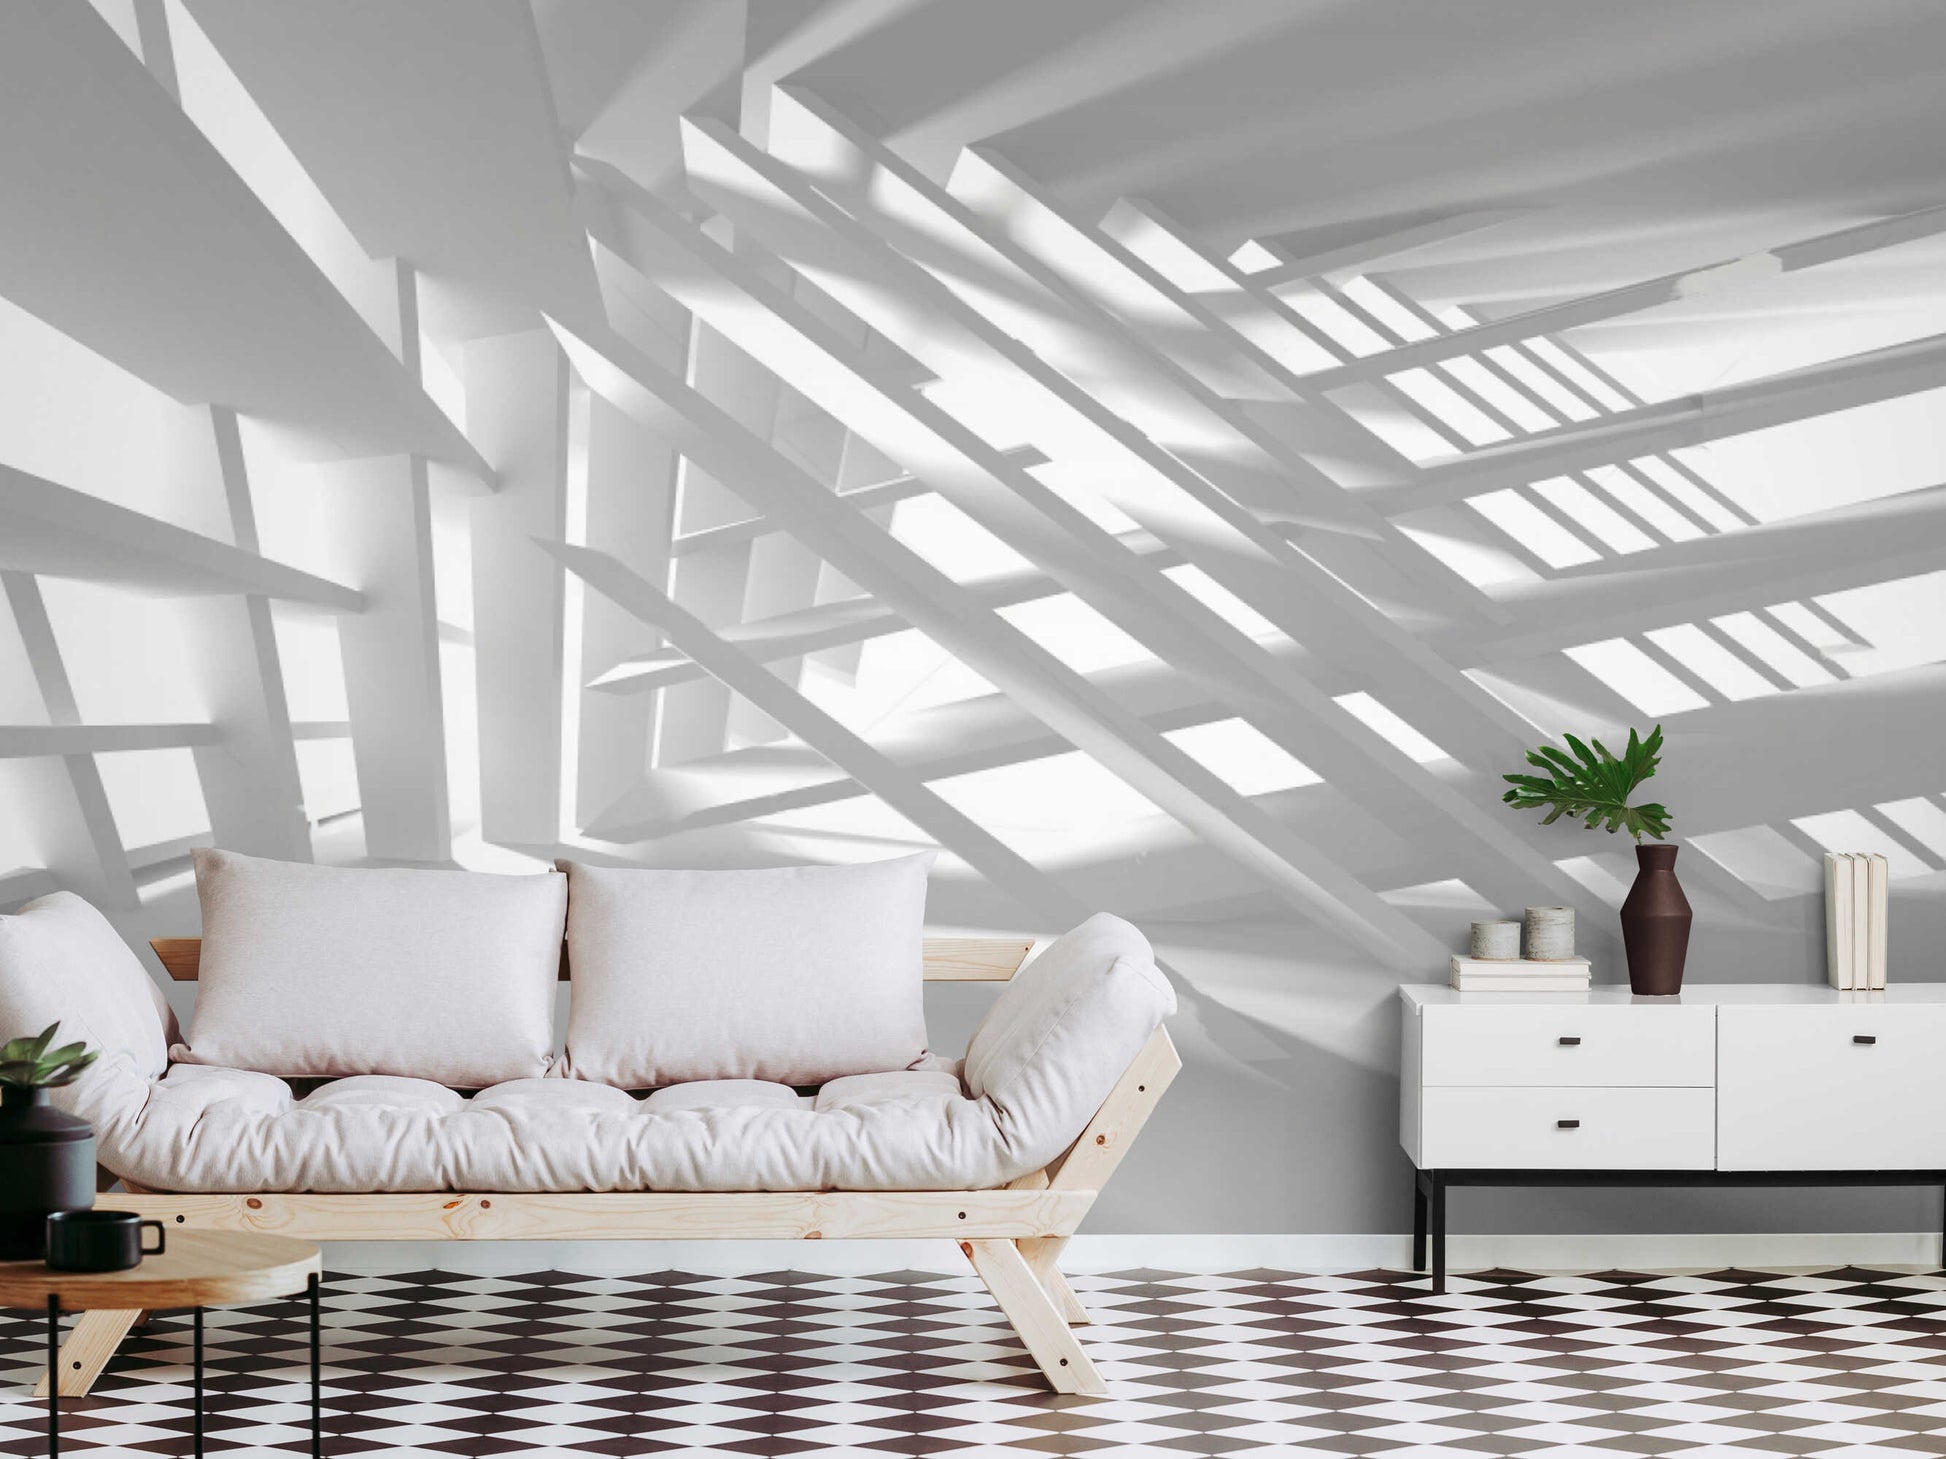 Sleek and minimalistic wallpaper design adding elegance to the room